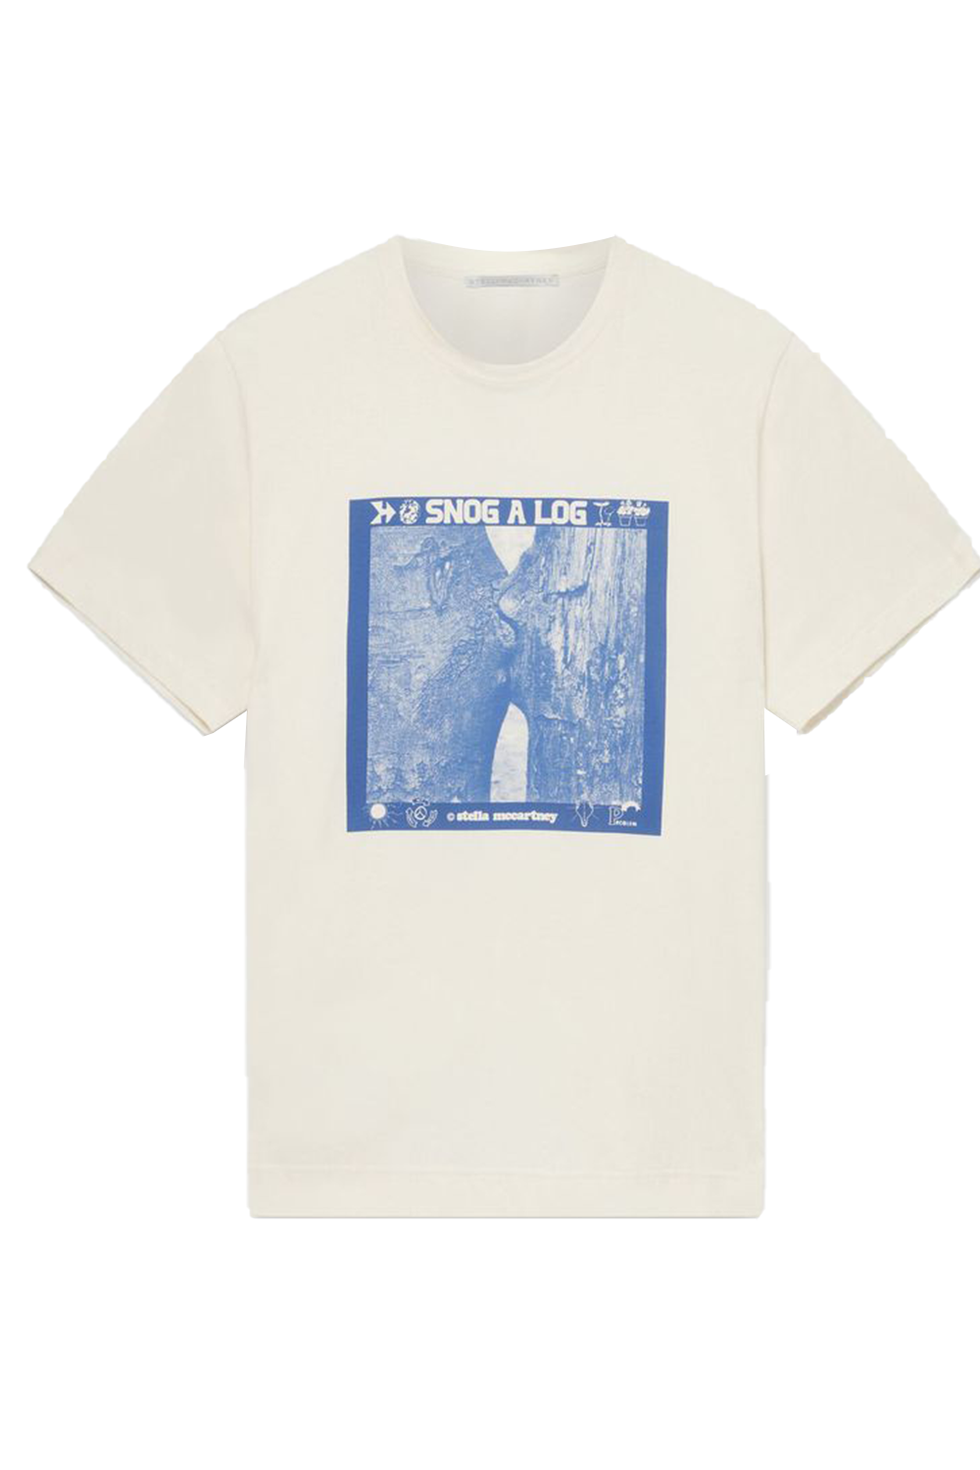 Snog-a-Log Regenerative Cotton T-Shirt